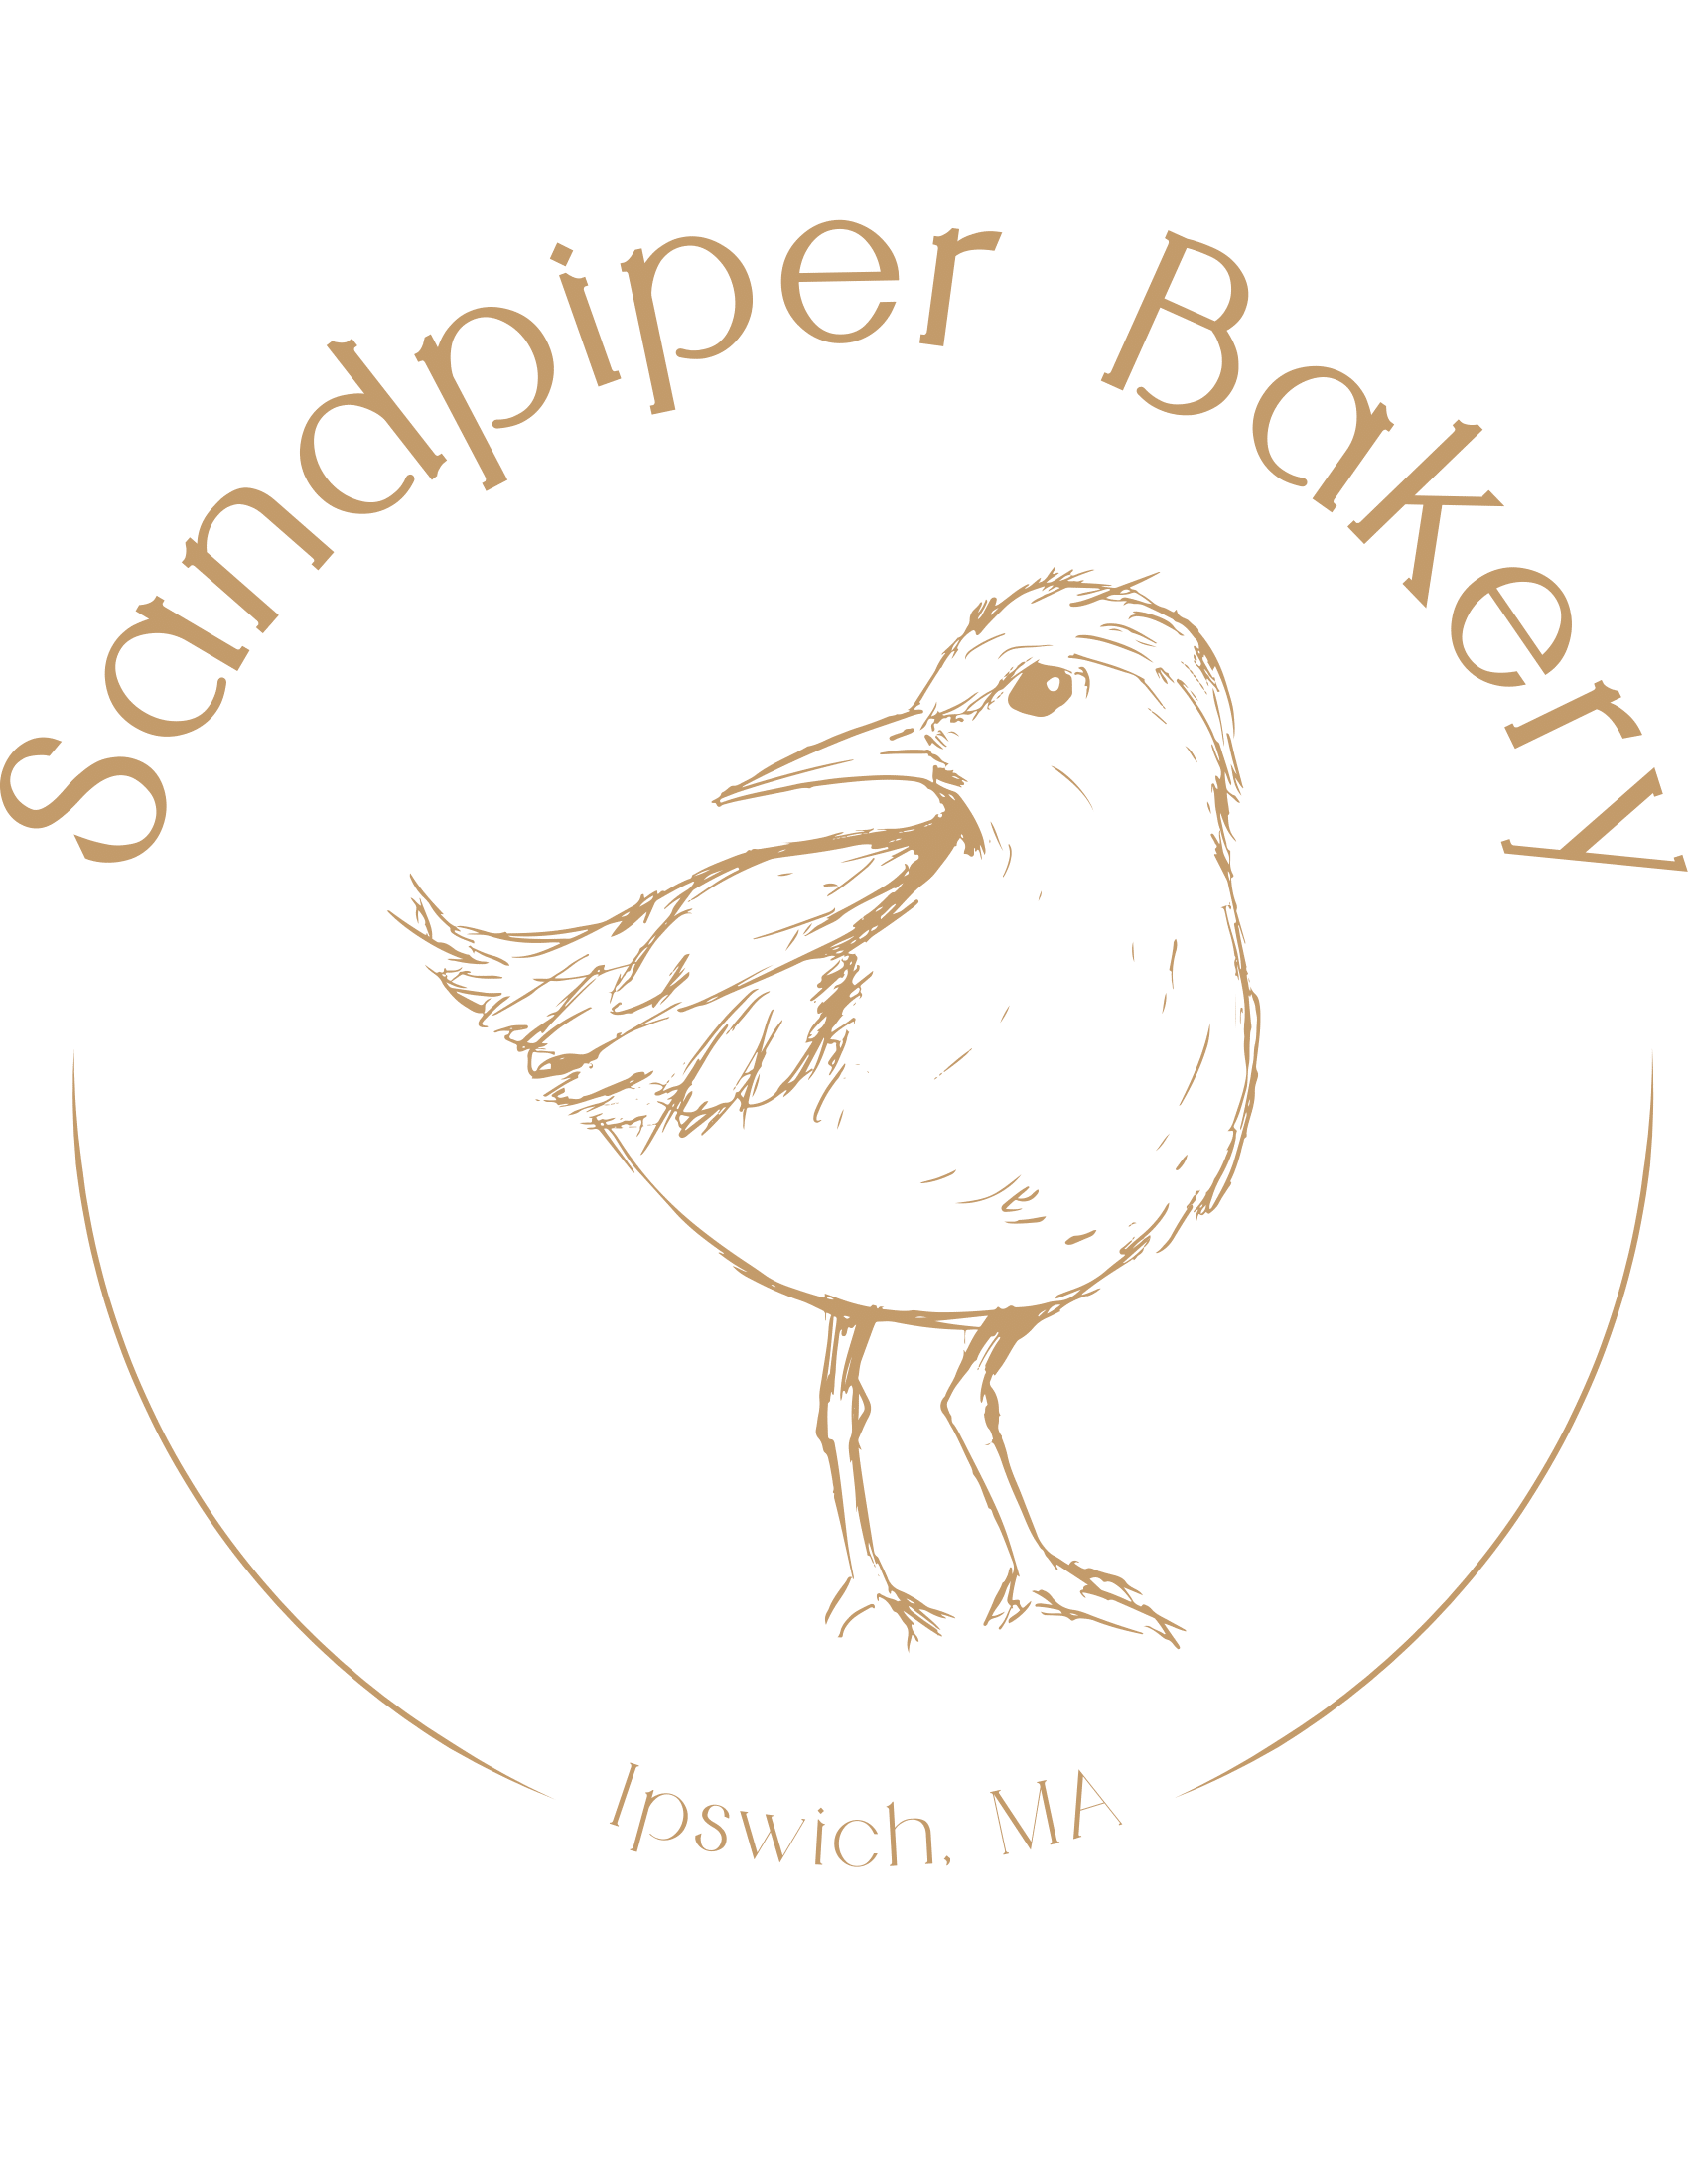 Sandpiper Bakery